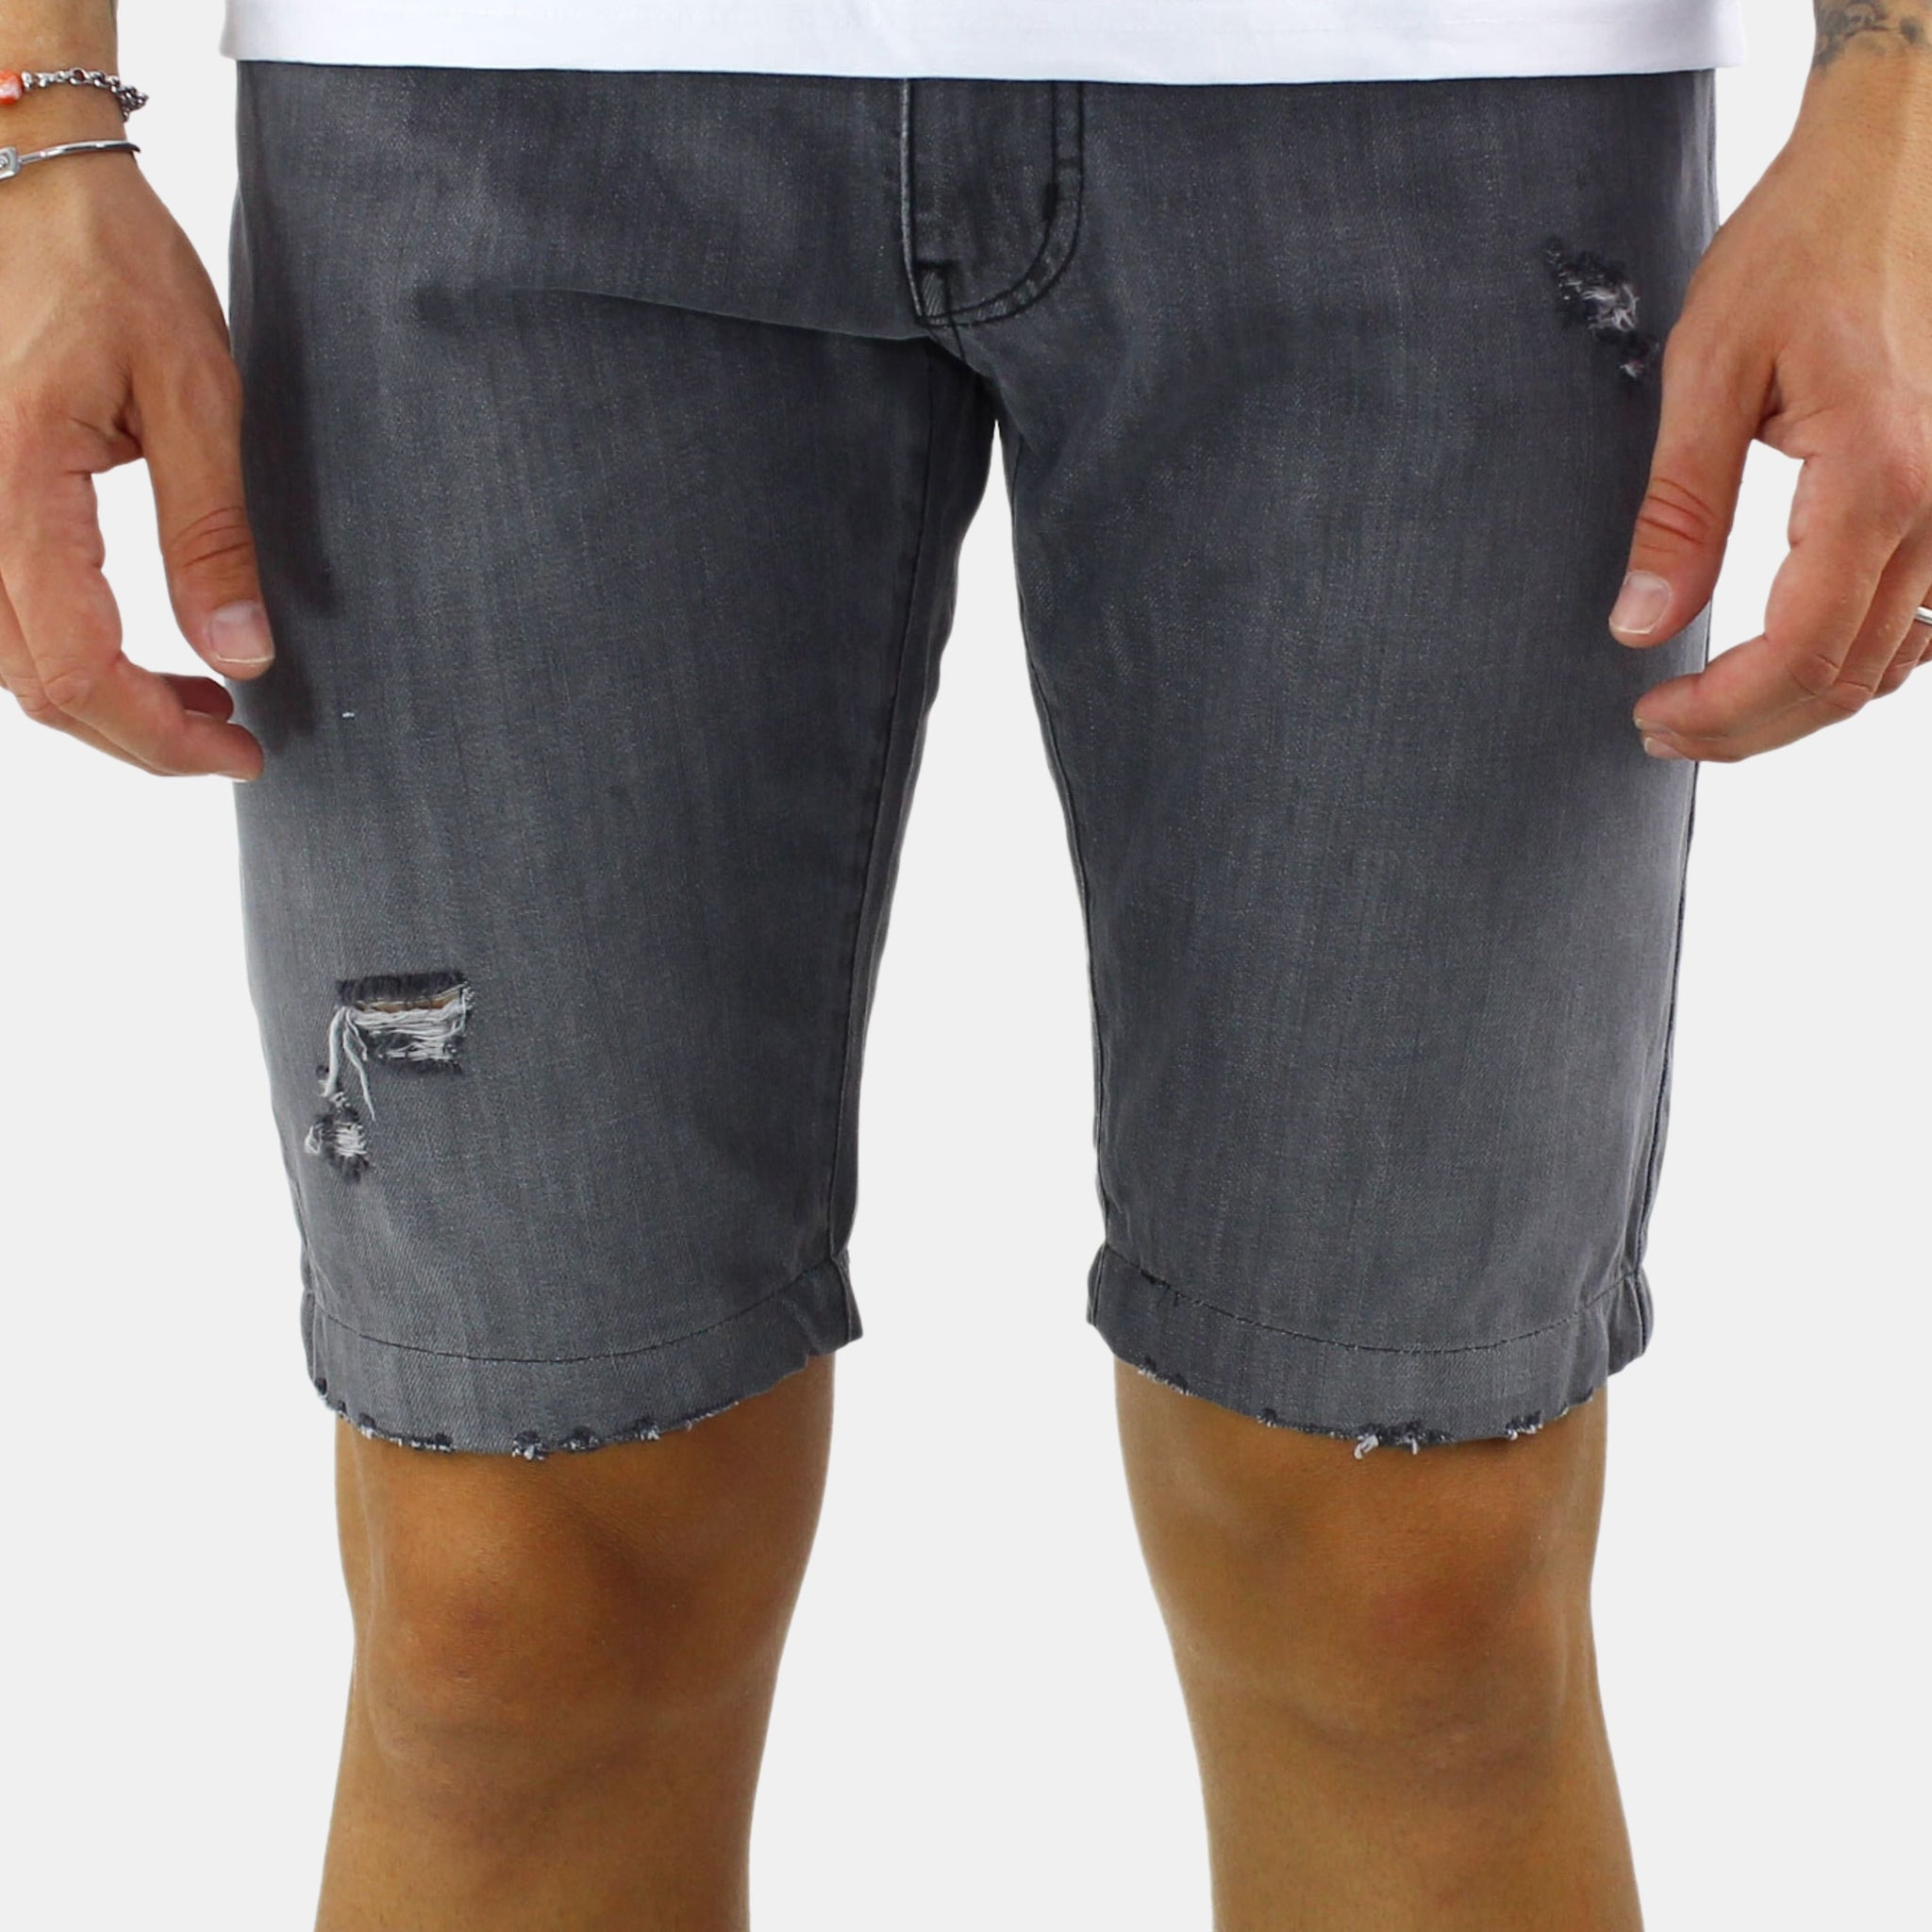 Ripped gray denim Bermuda shorts